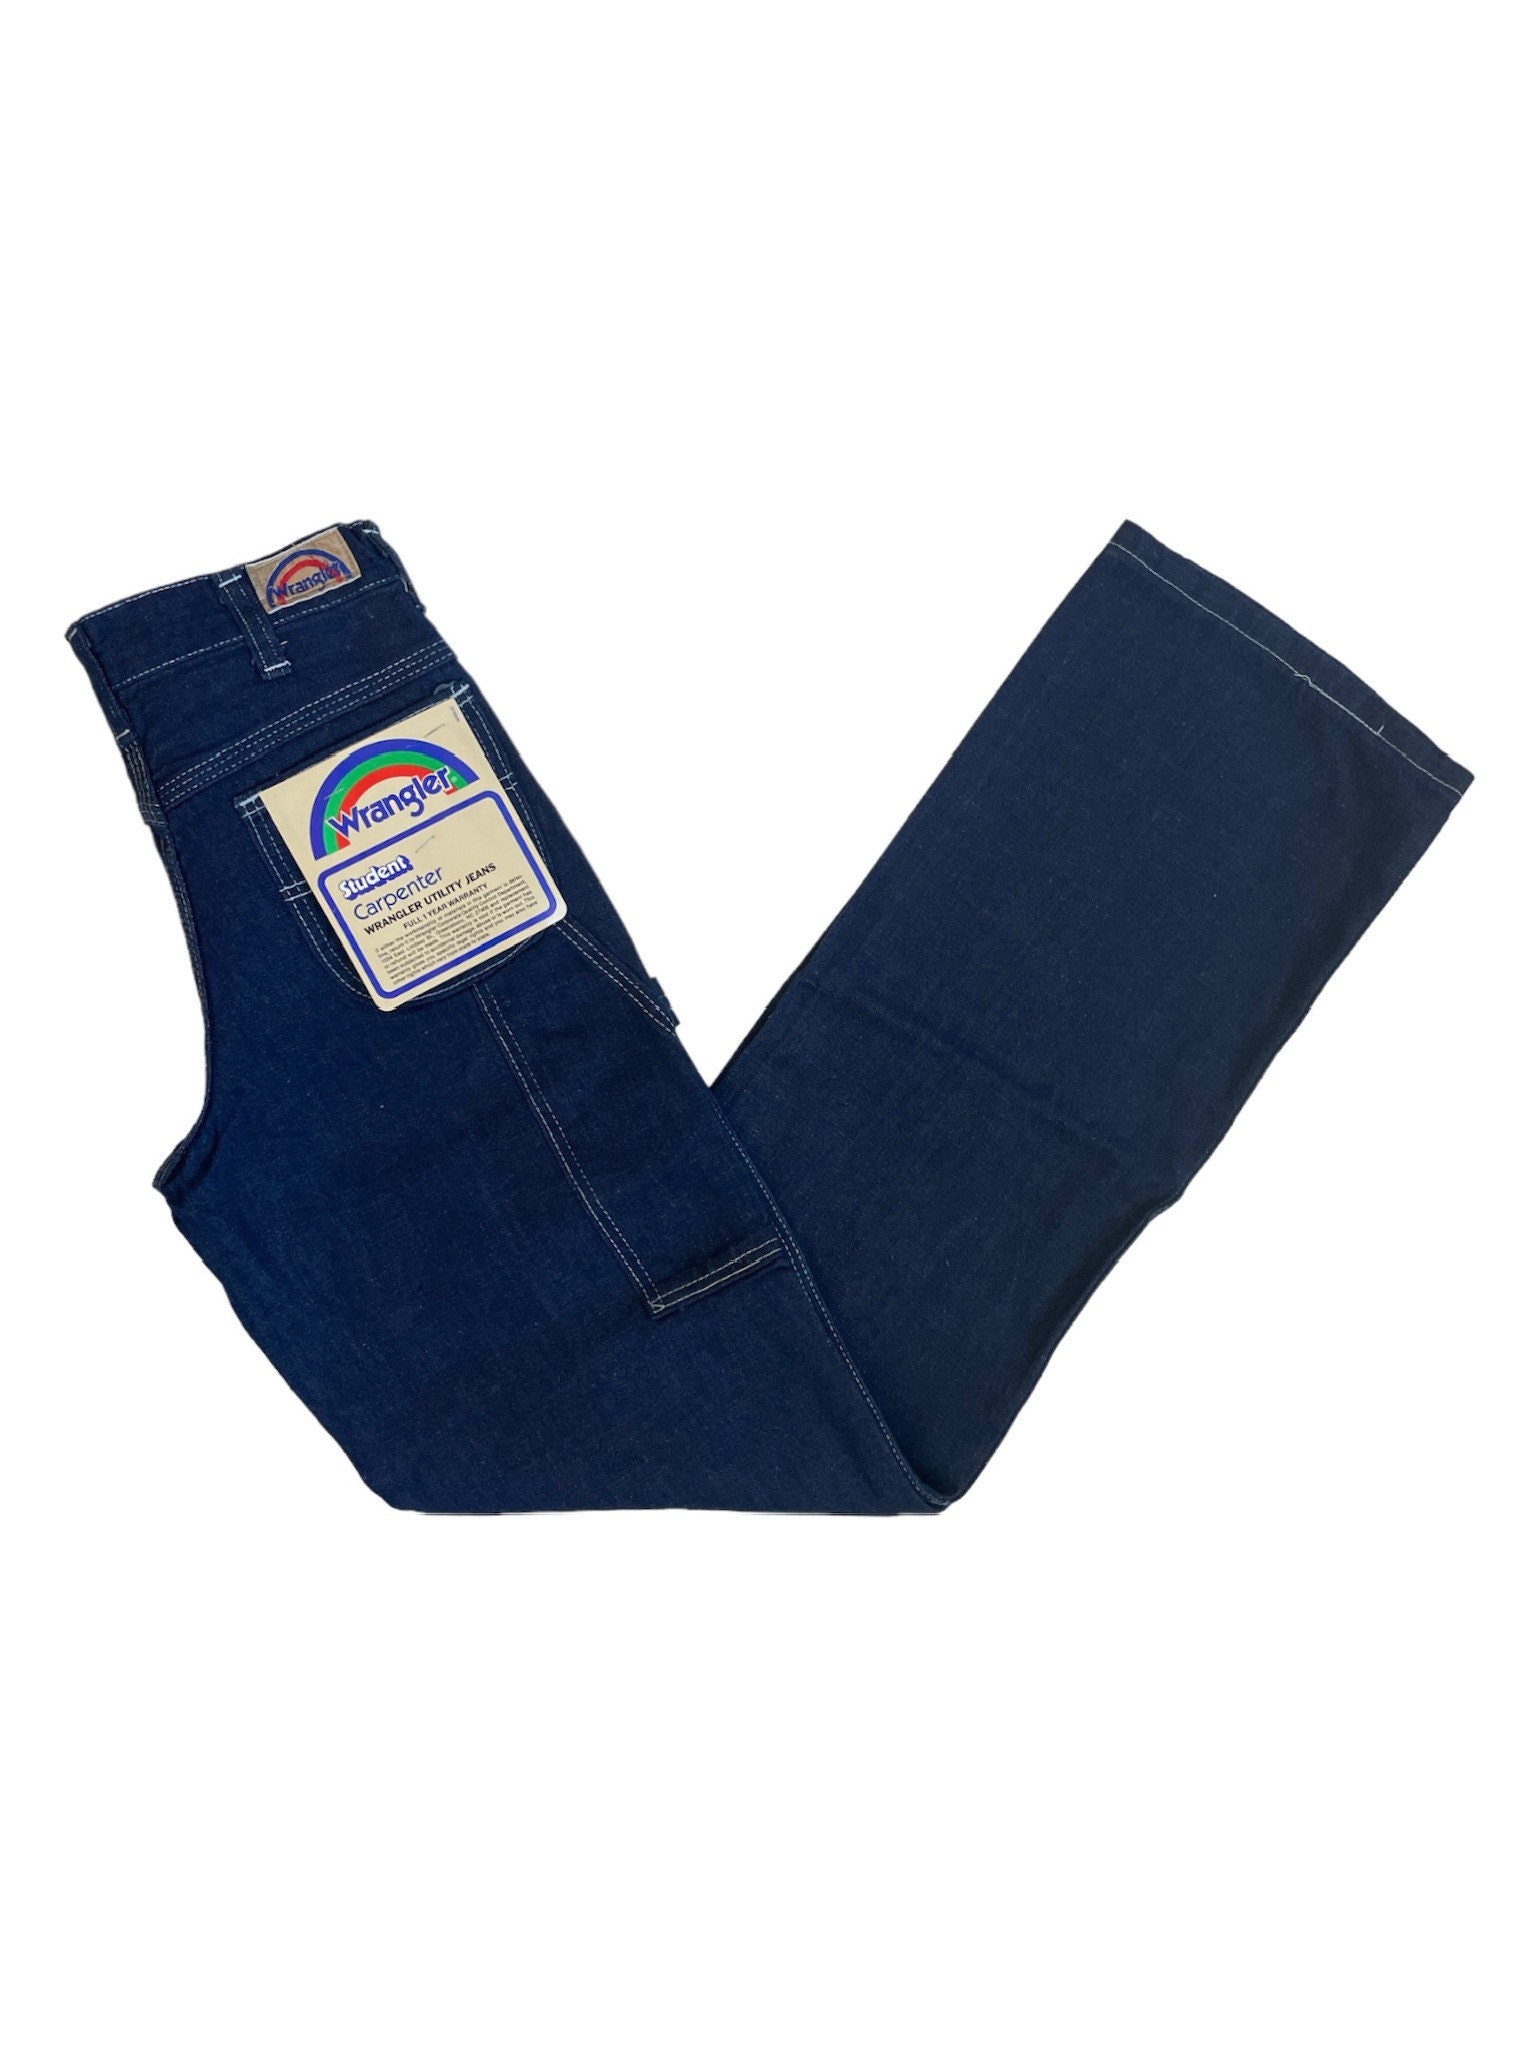 Vintage Wrangler Carpenter Jeans Pants Size 26x30 Deadstock - Etsy